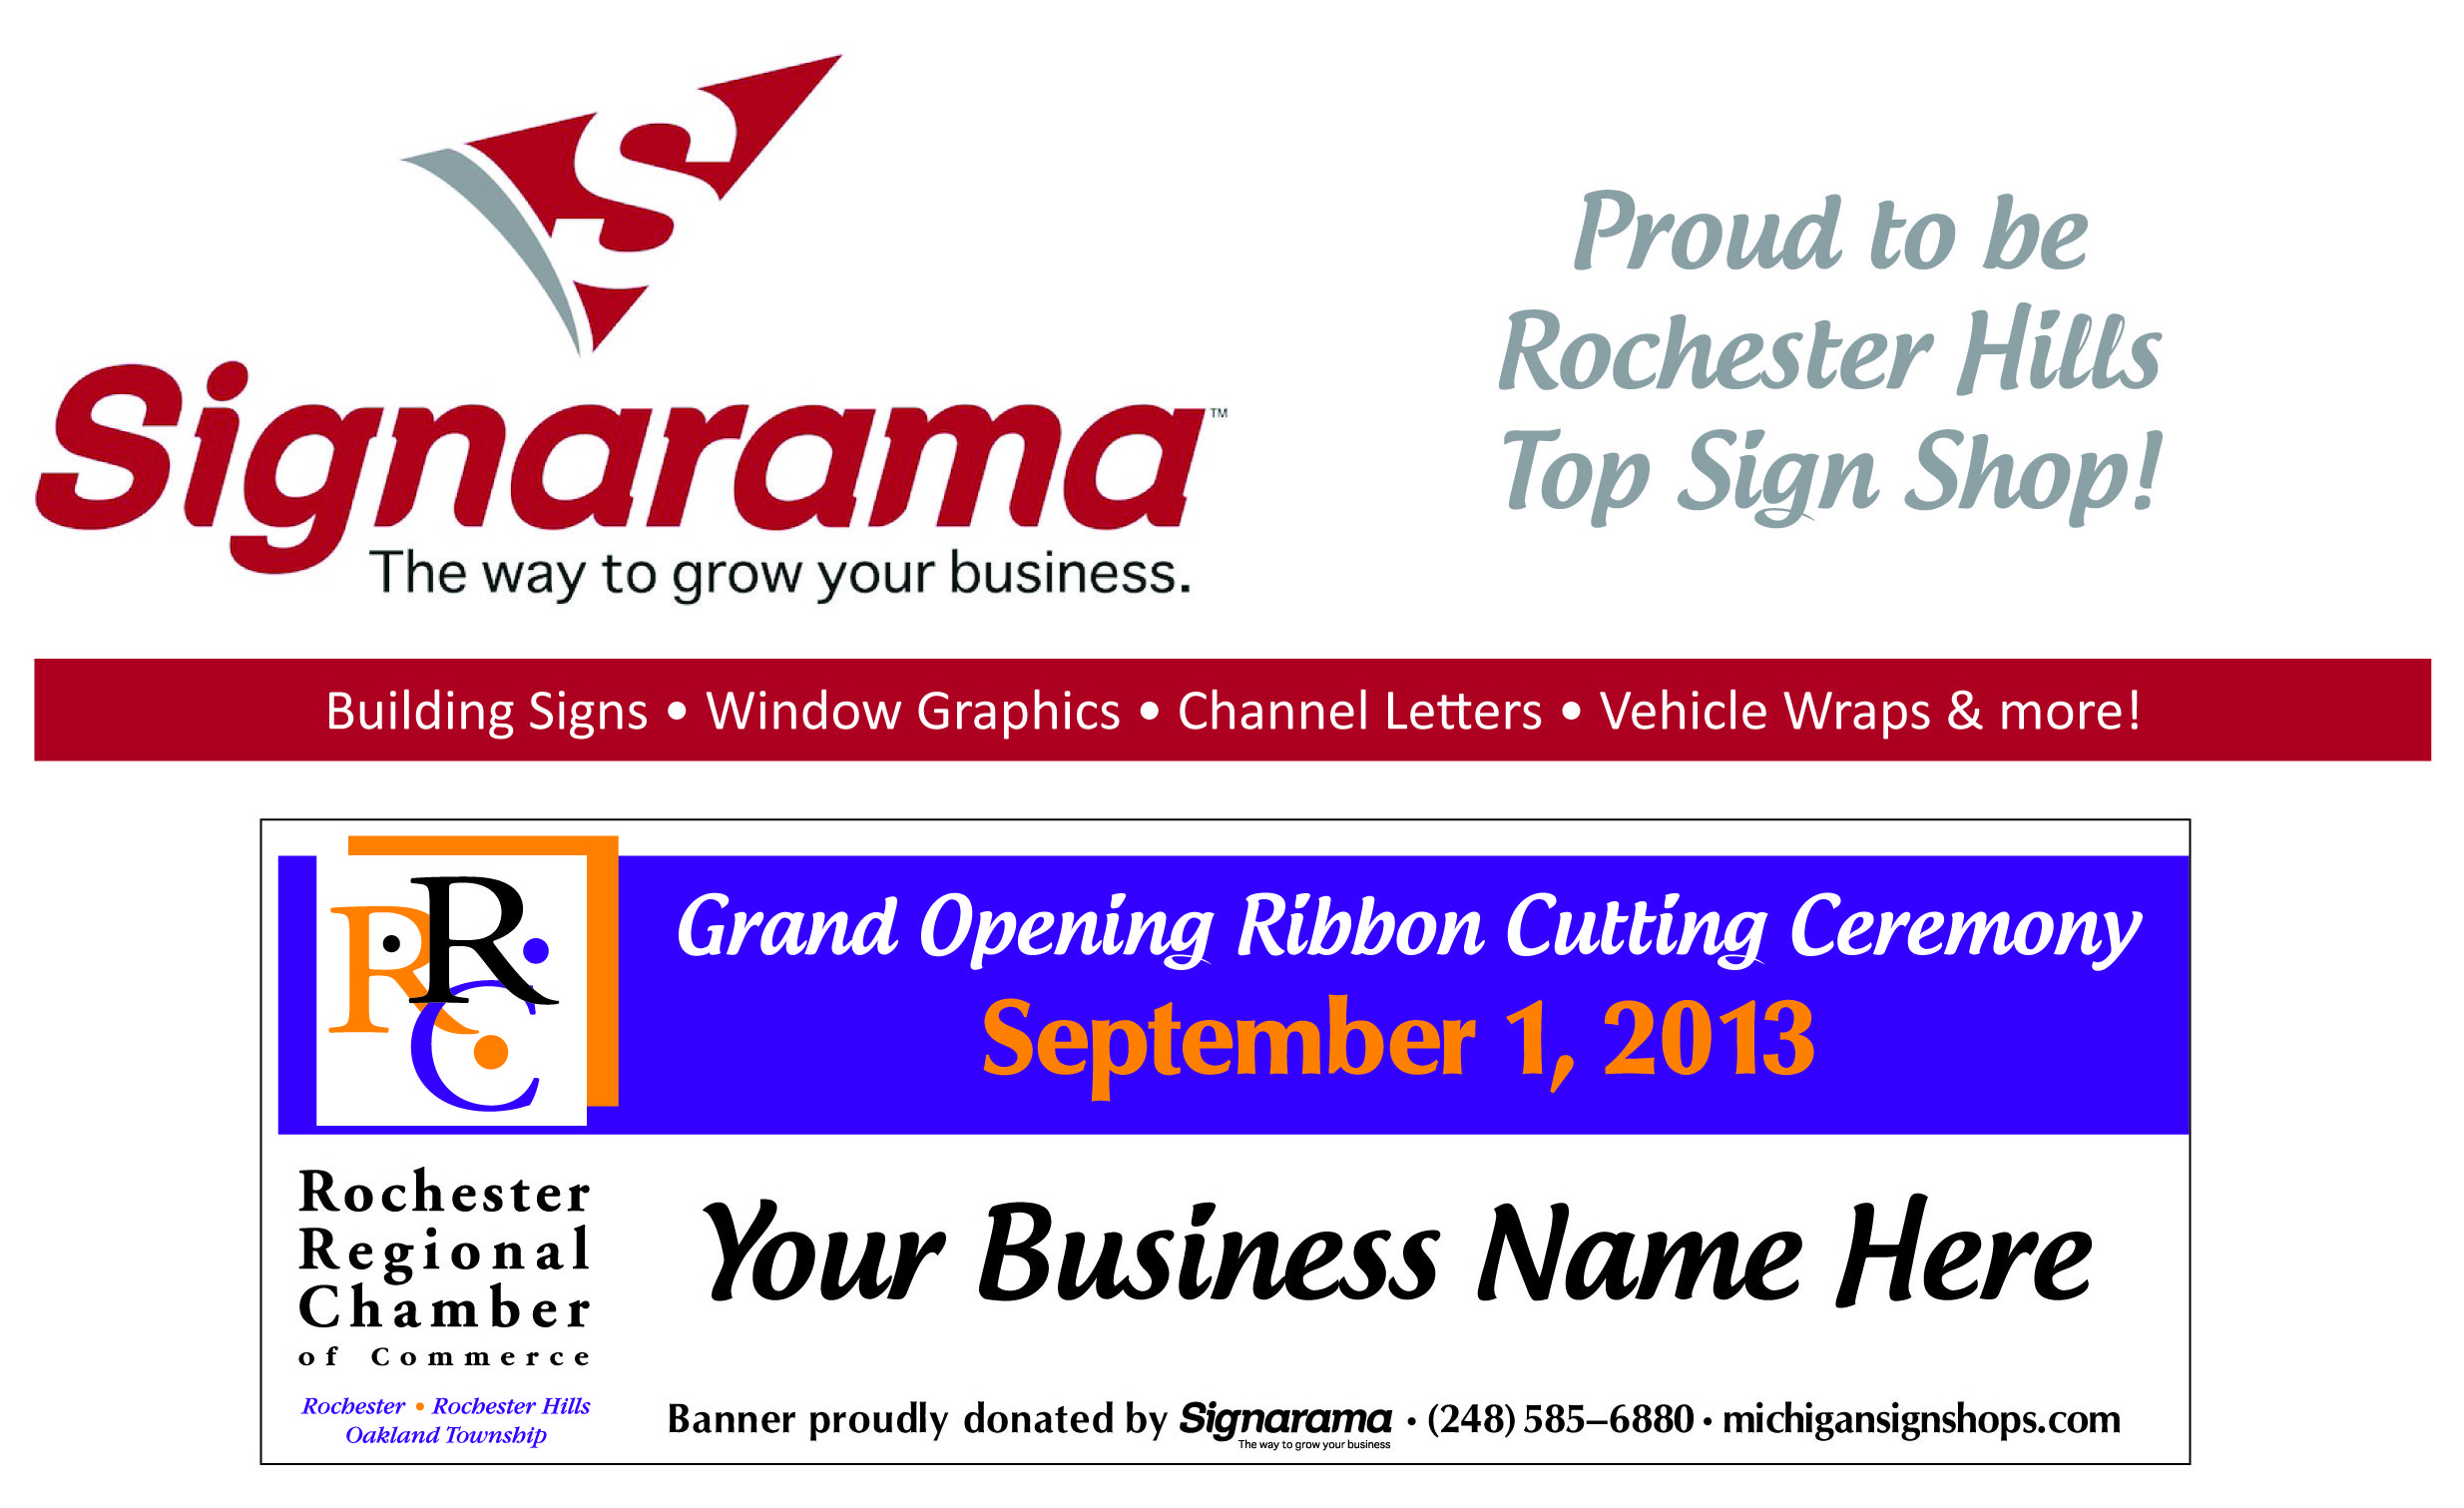 Free Banner for New Rochester Regional Chamber of Commerce Members!